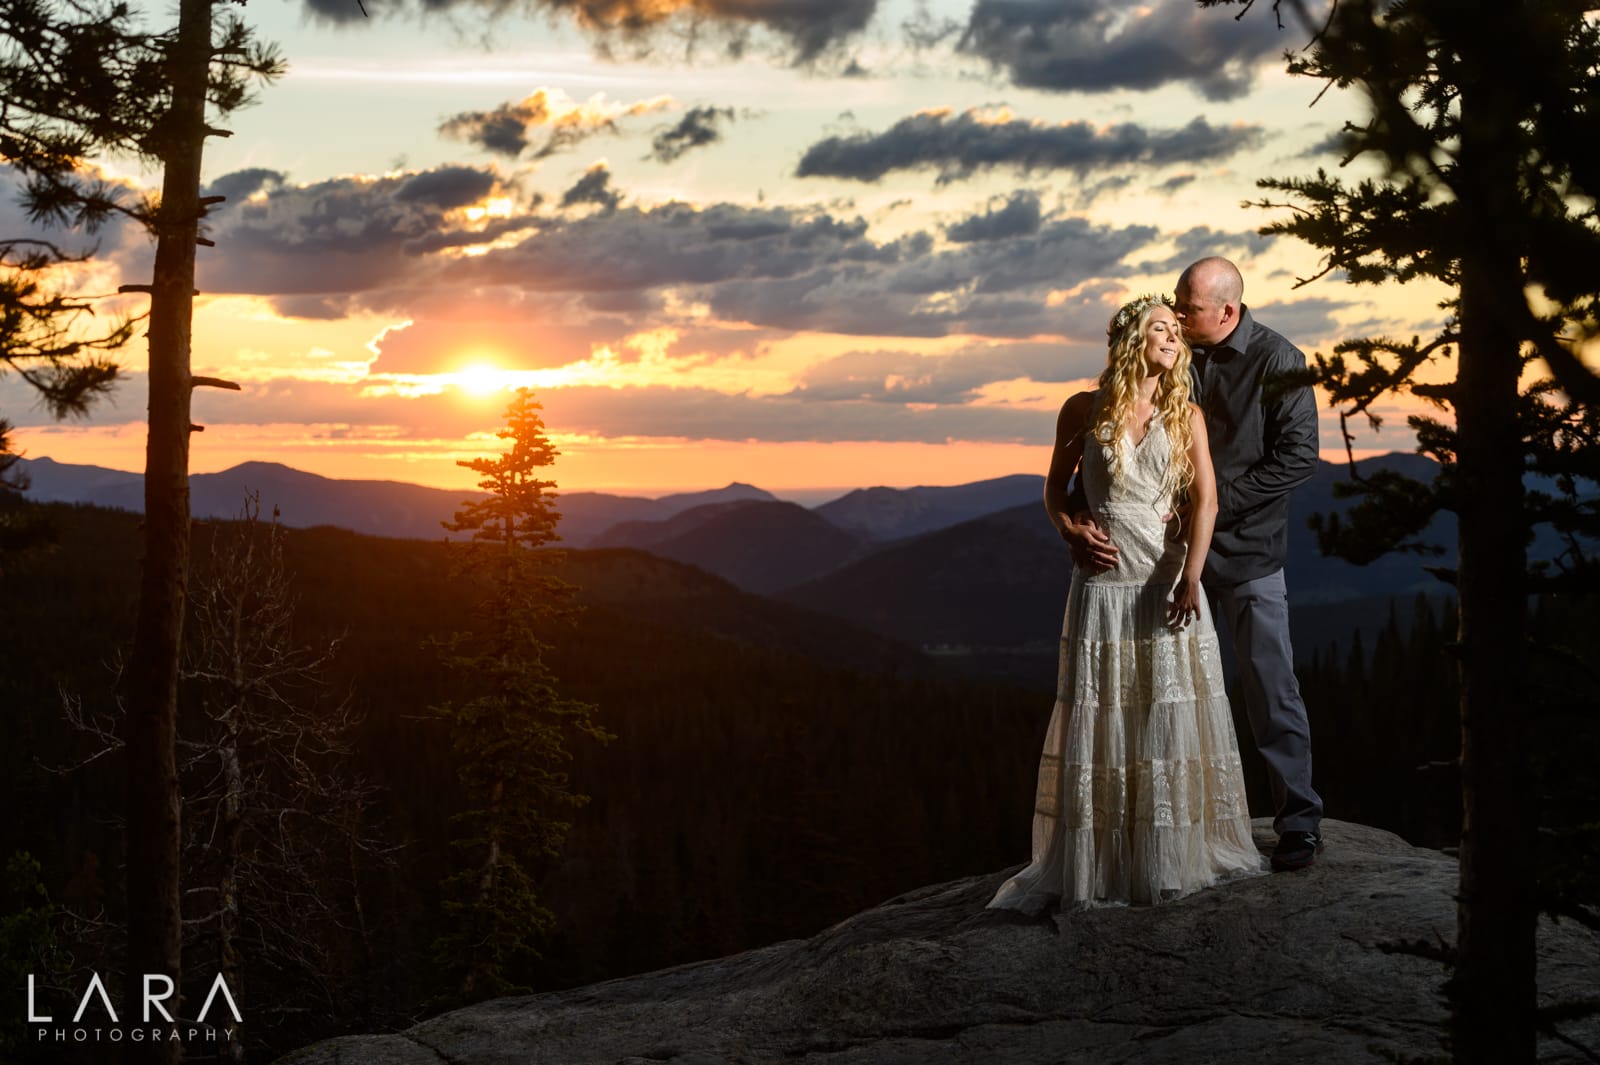 Danielle & Will – Rocky Mountain National Park Sunrise Elopement